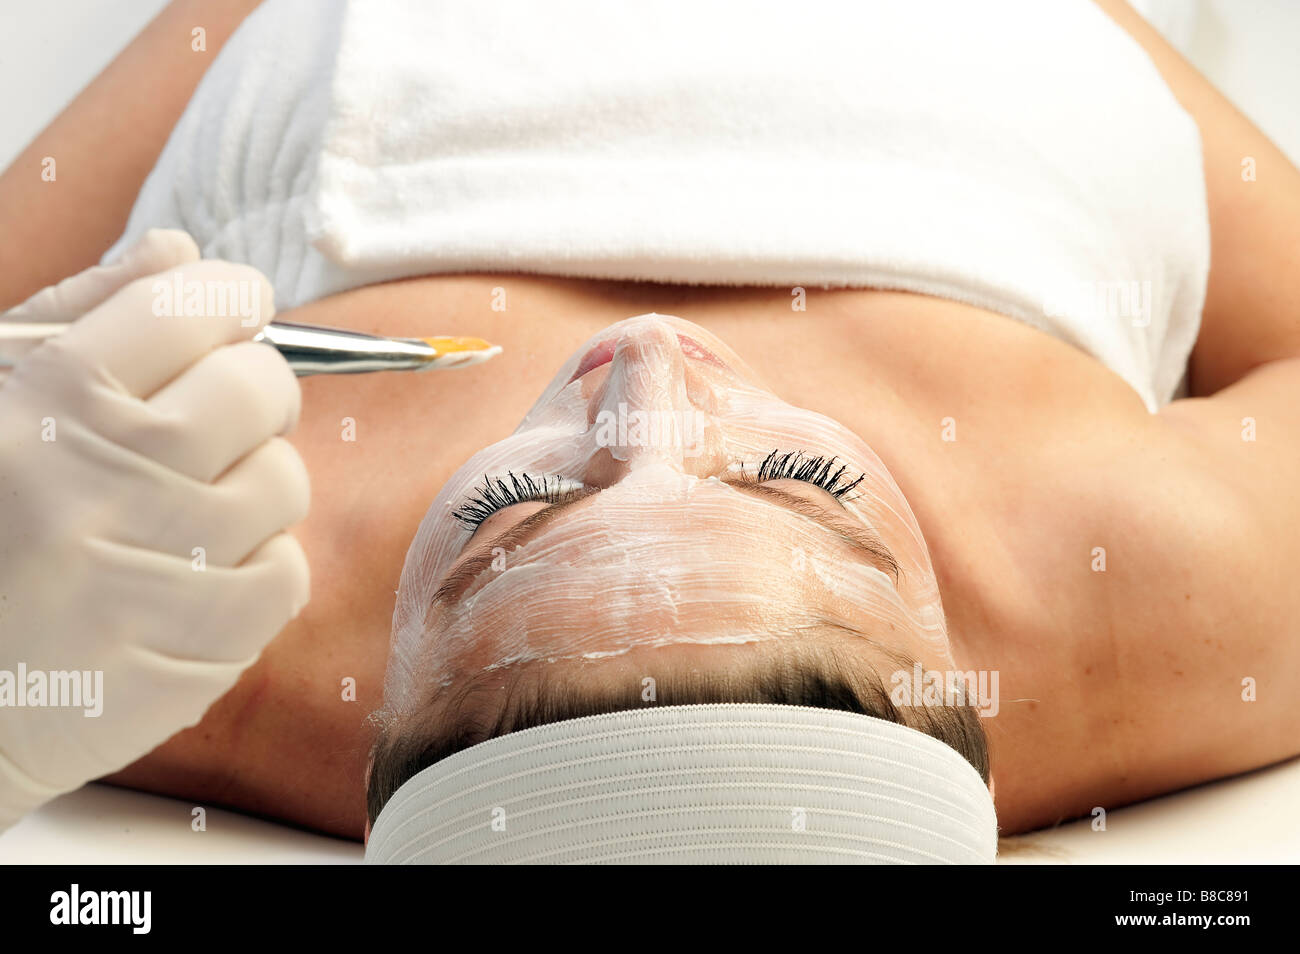 Woman getting a facial treatment at a spa Banque D'Images